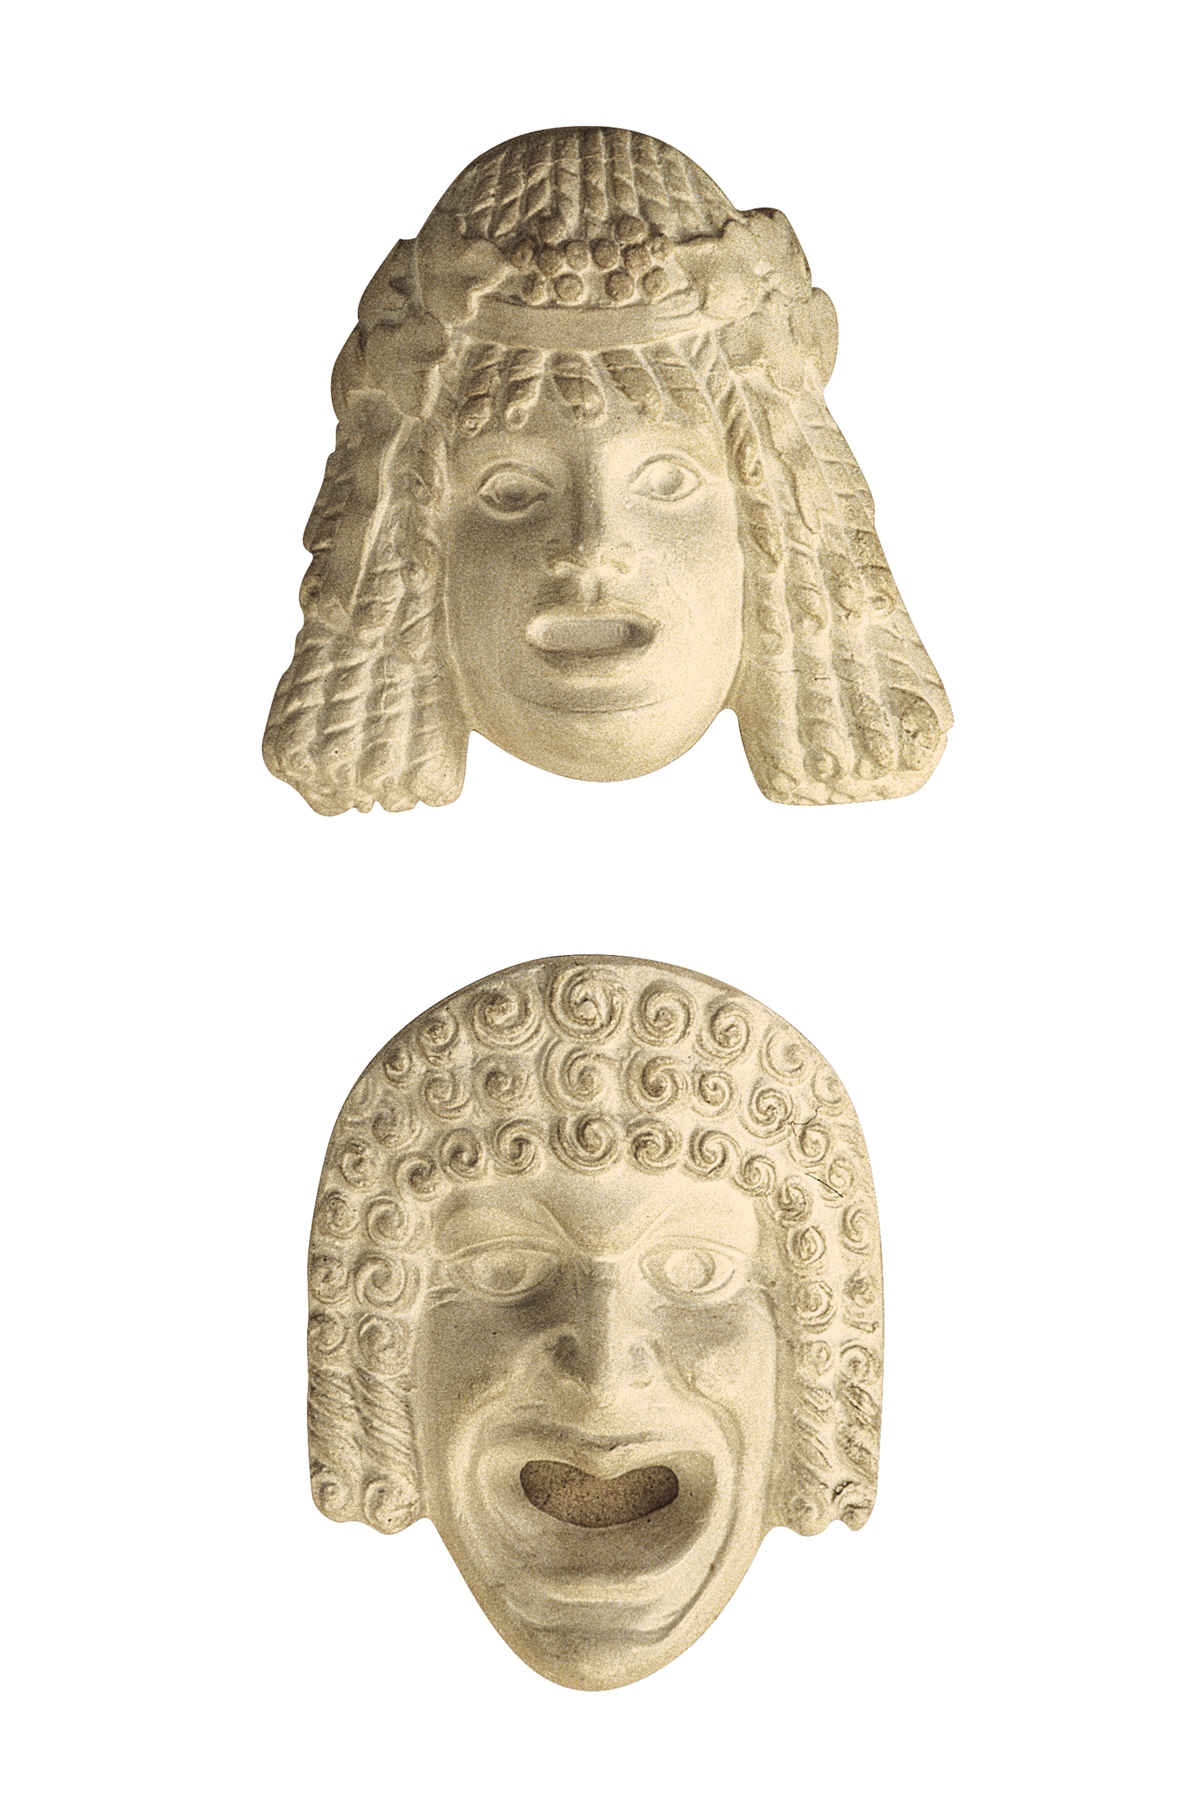 Roman theatrical masks